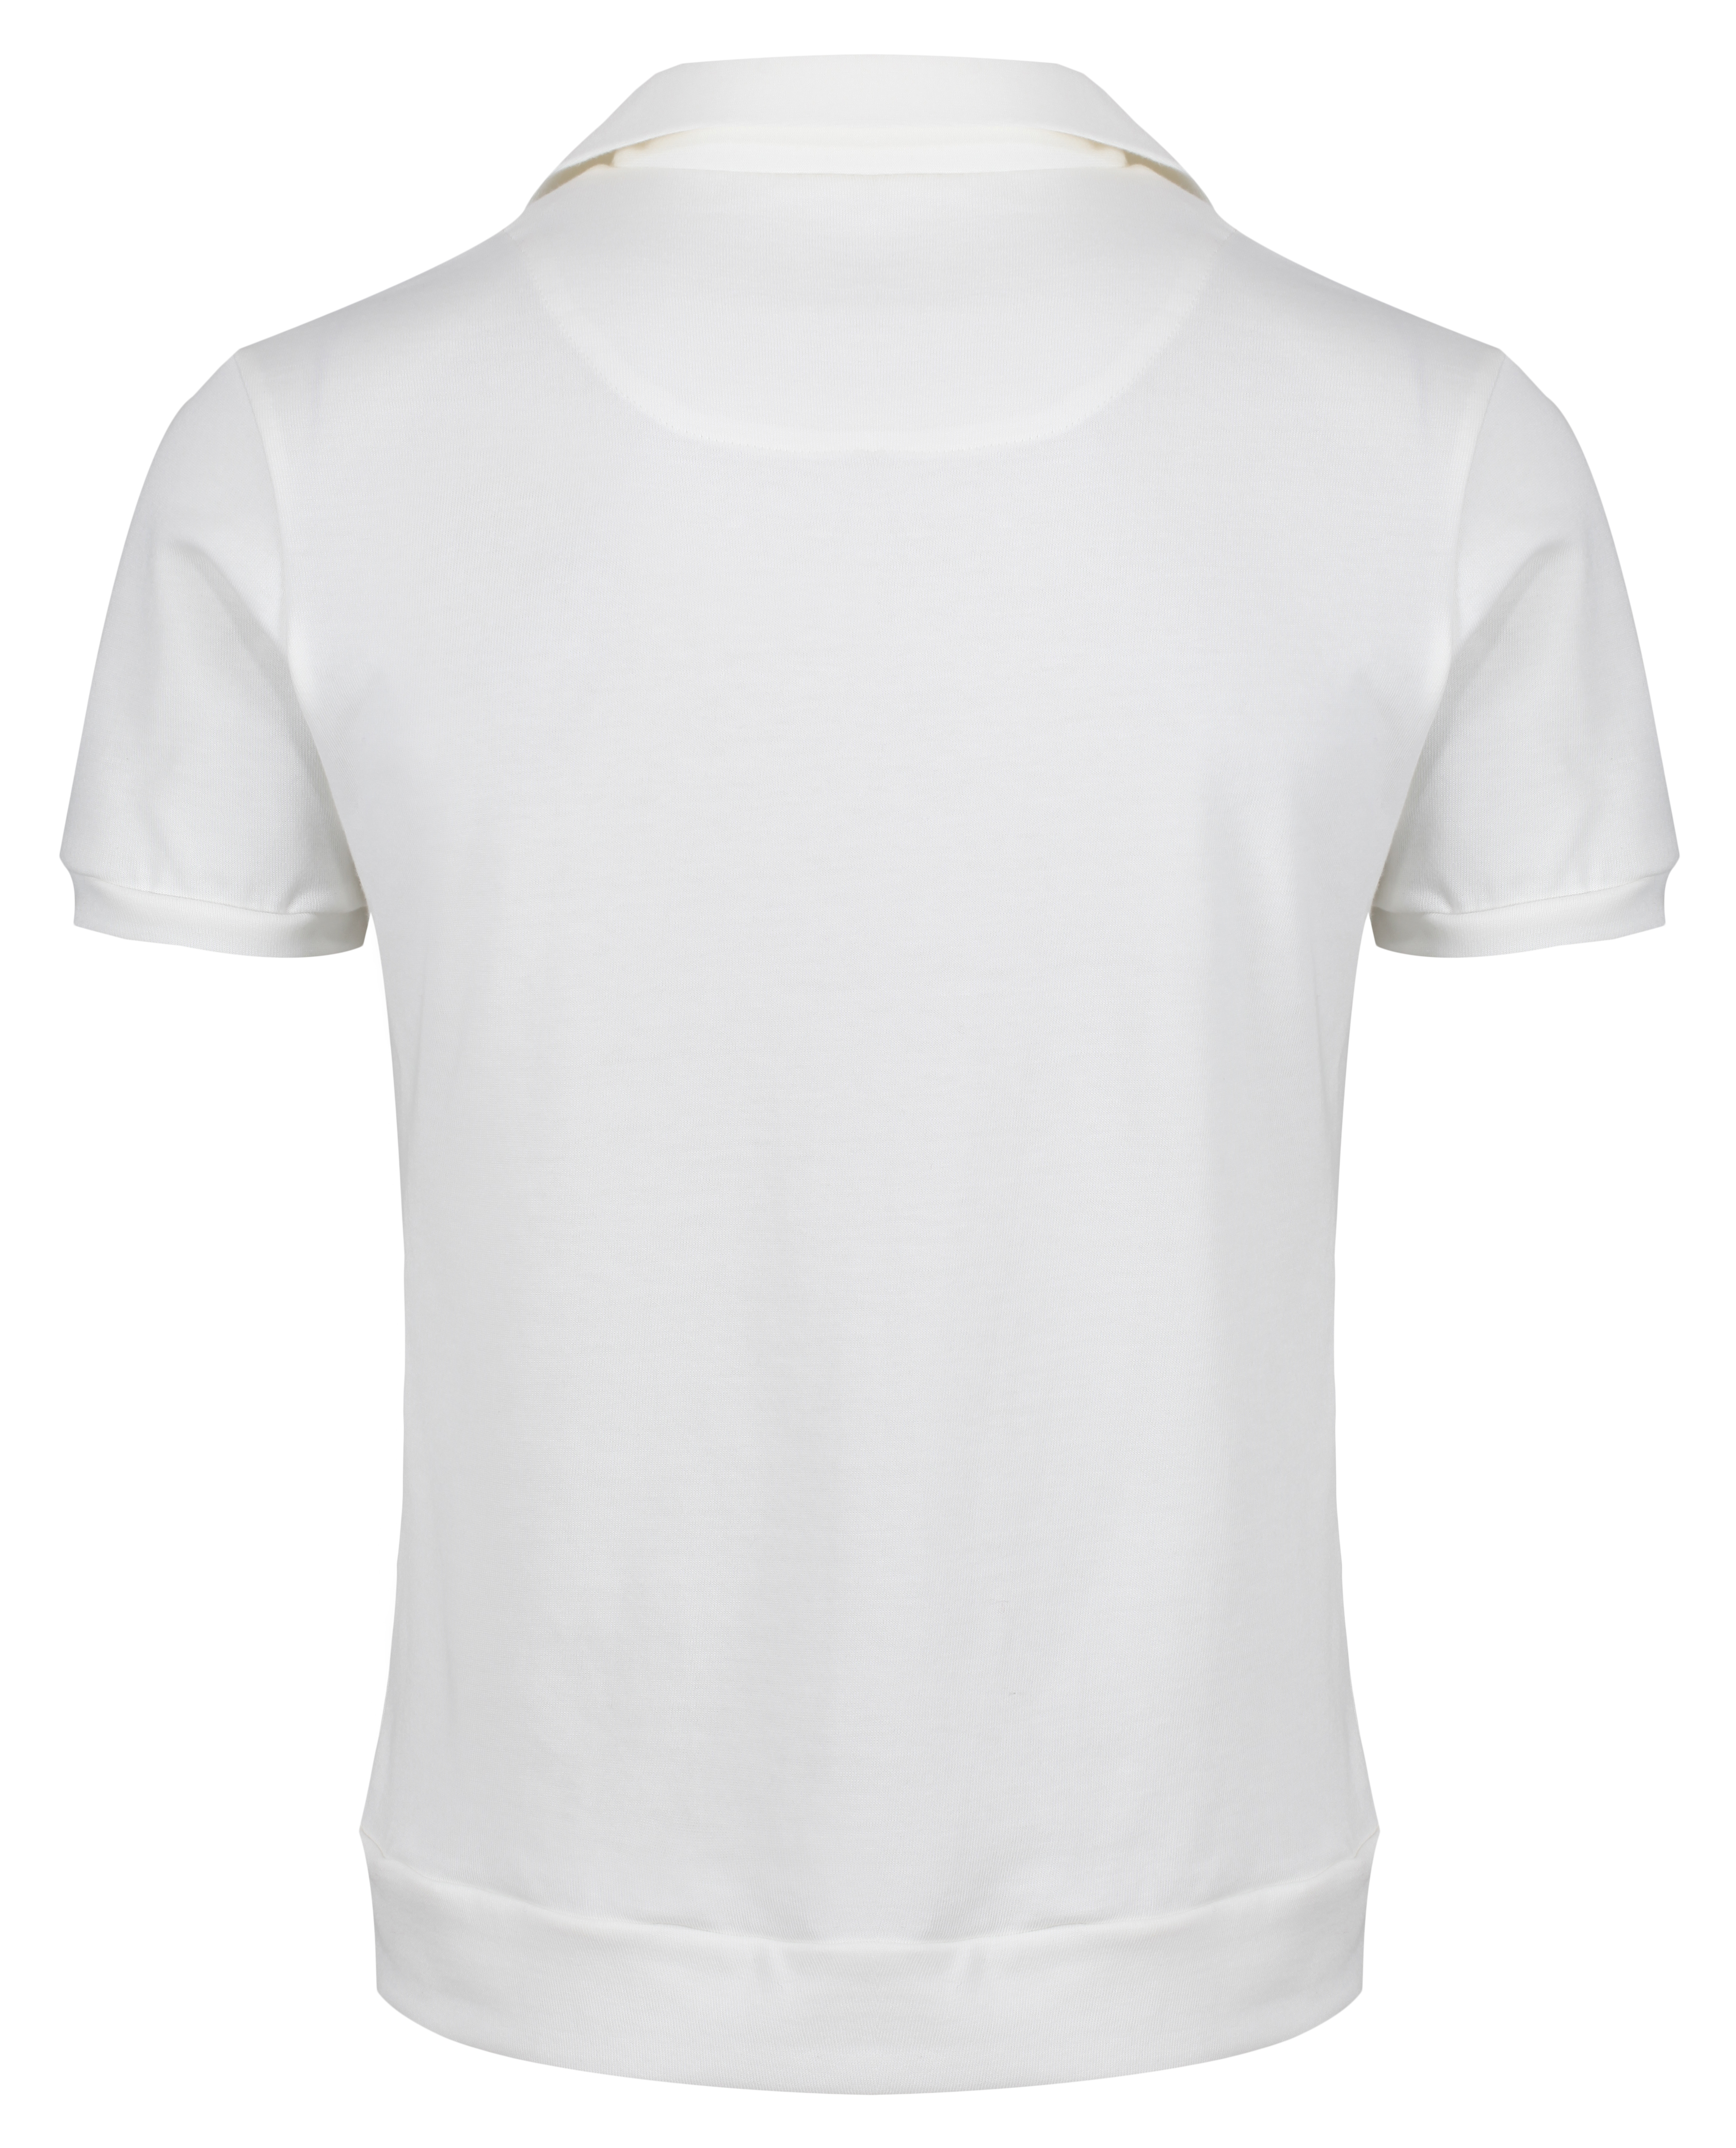 The "da Nile" Shirt Ivory white - Made in England